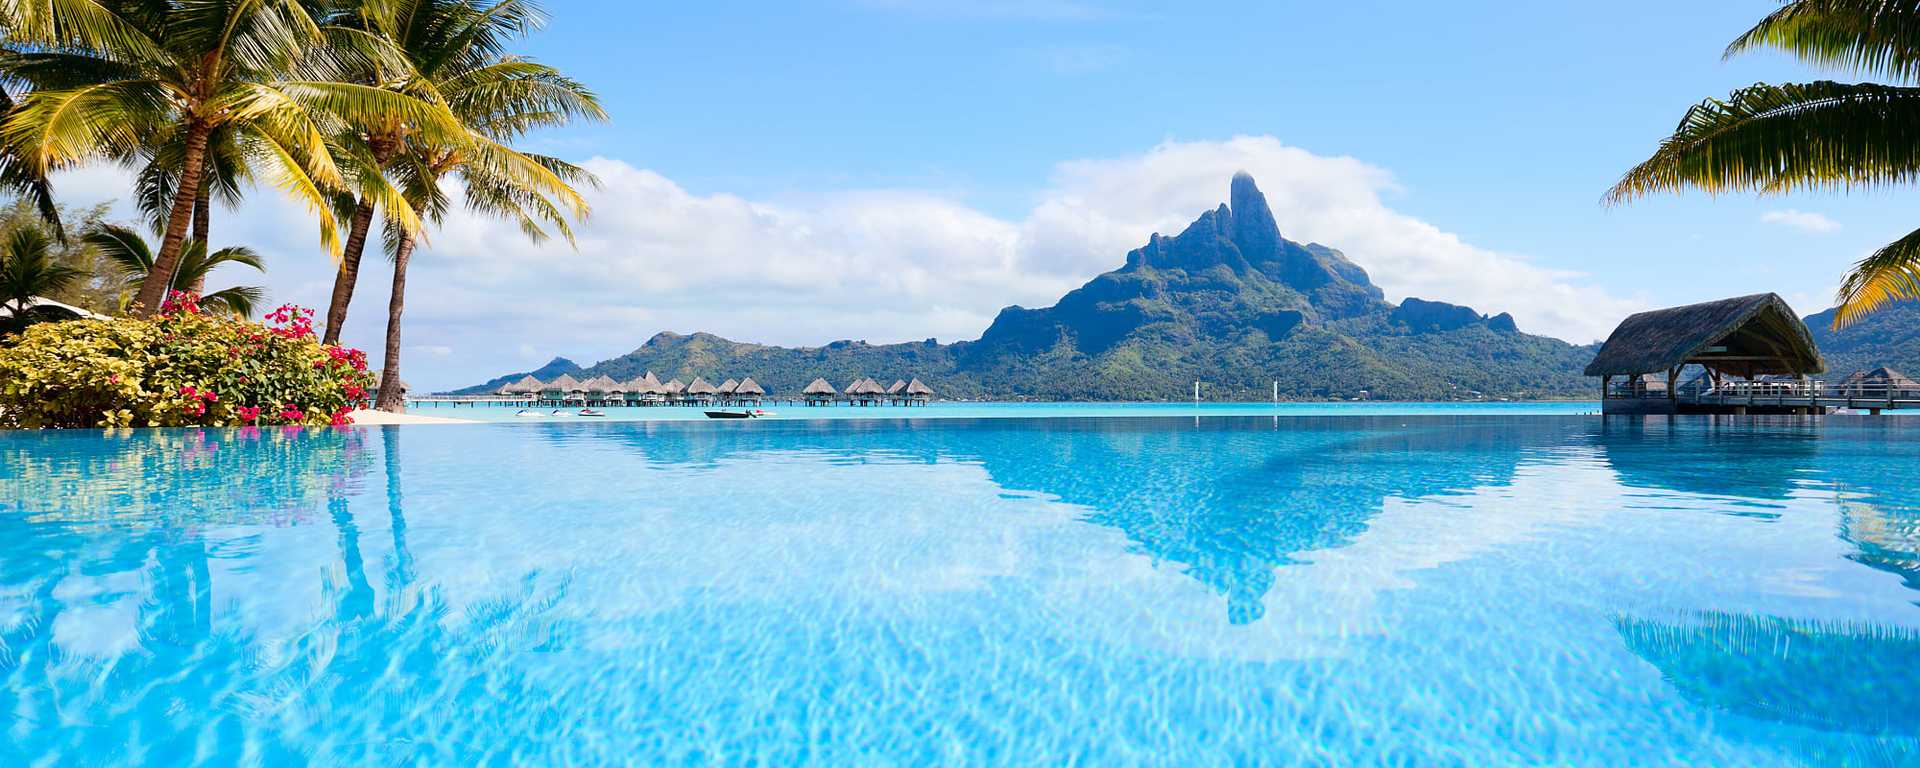 Resort pool with bungalows and Mount Otemanu in Bora Bora, French Polynesia